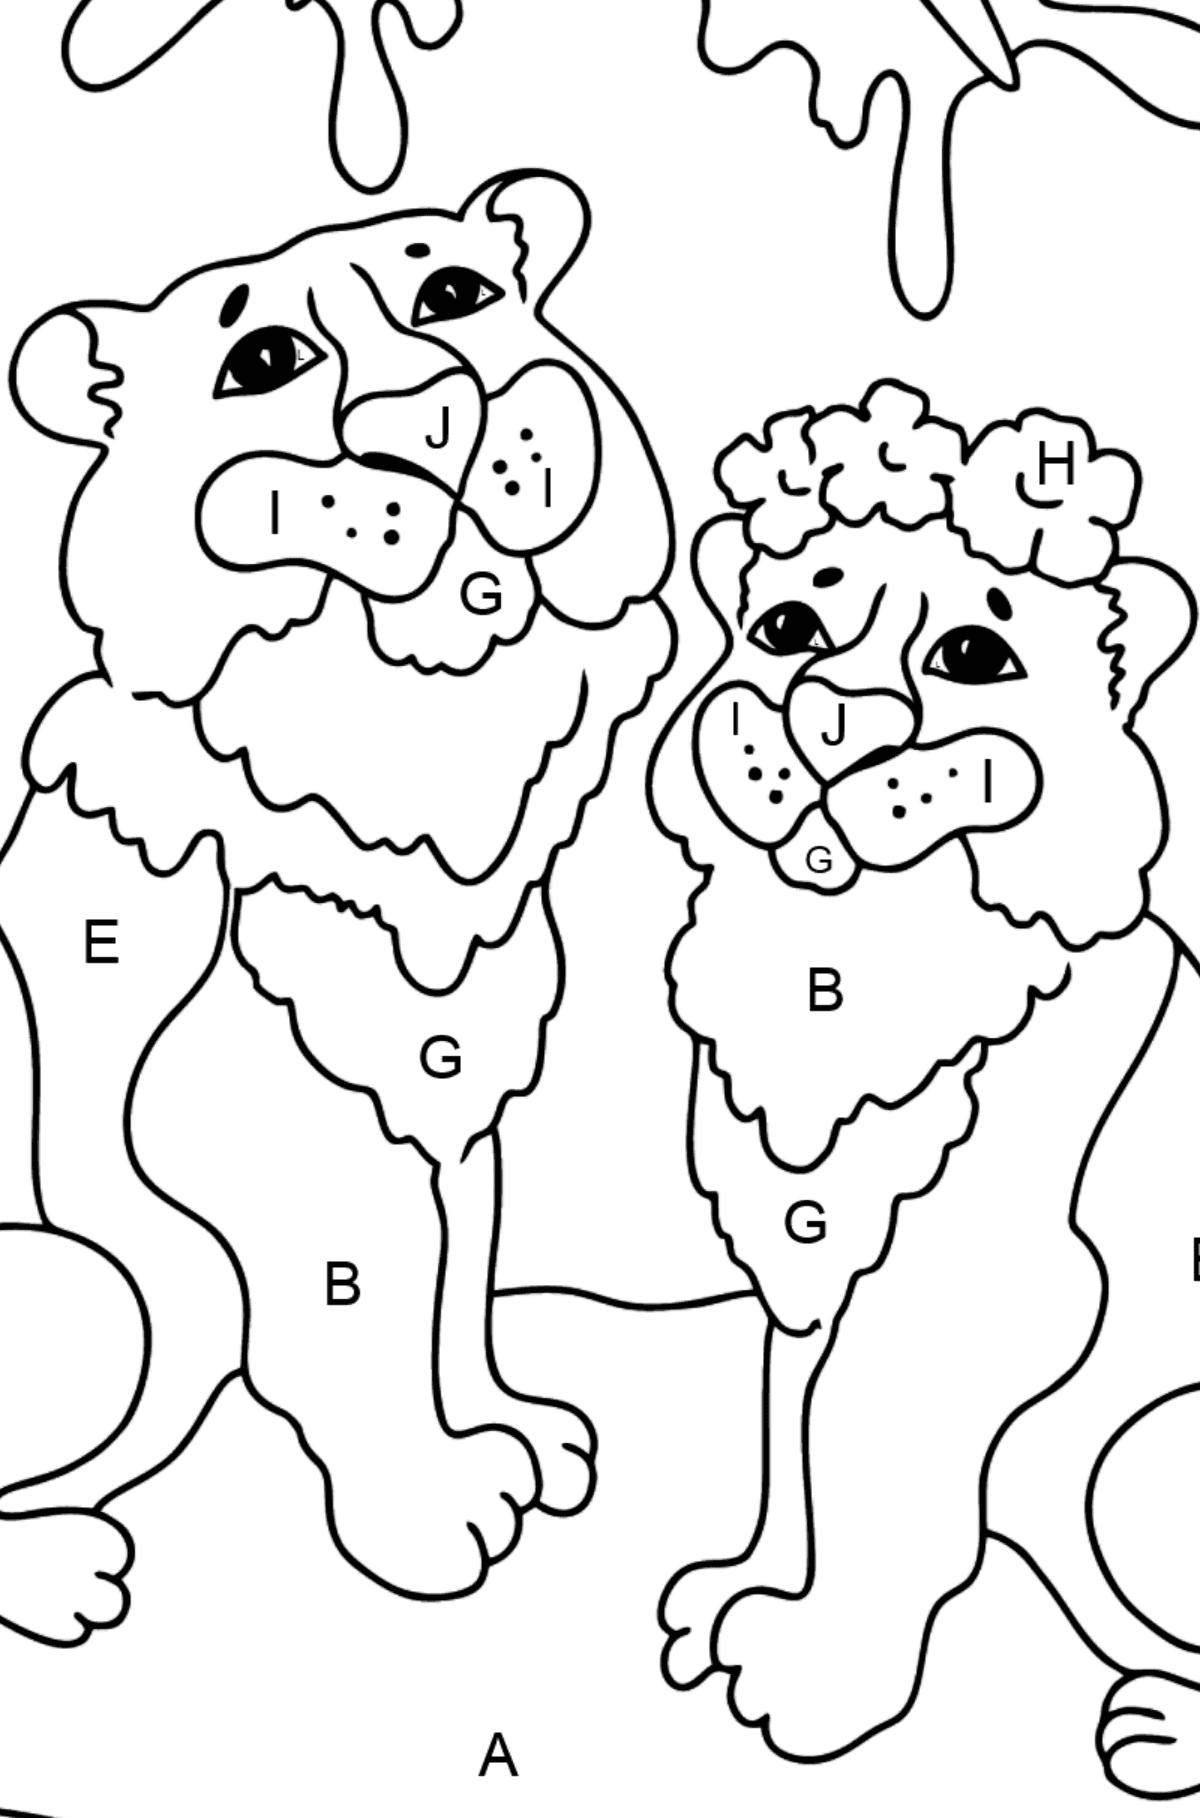 Desenho de tigre e tigresa para colorir - Colorir por Letras para Crianças